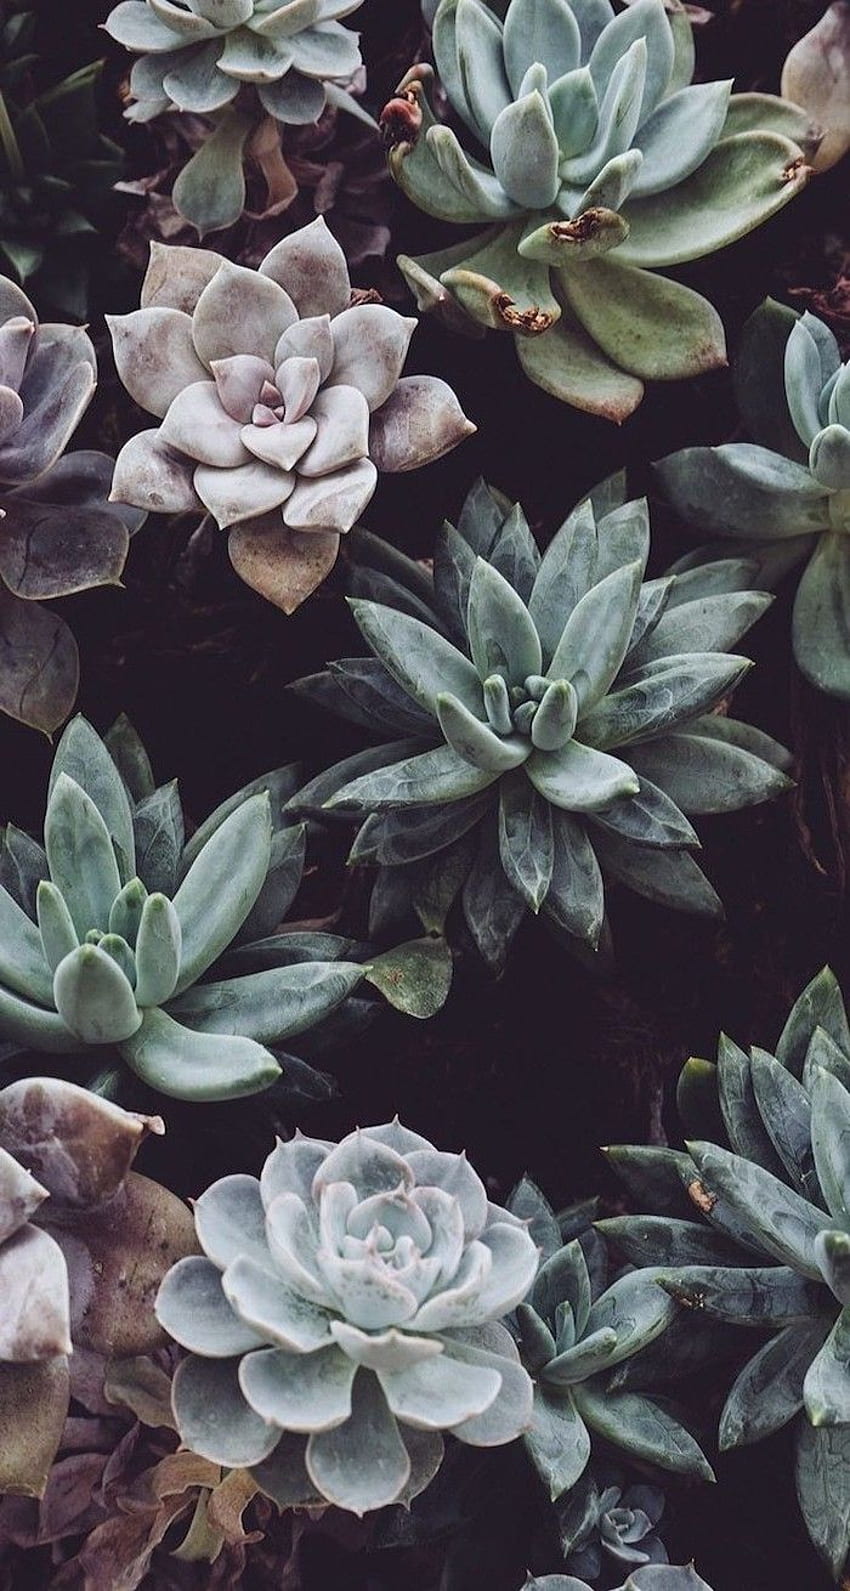 A close up of some succulents - Succulent